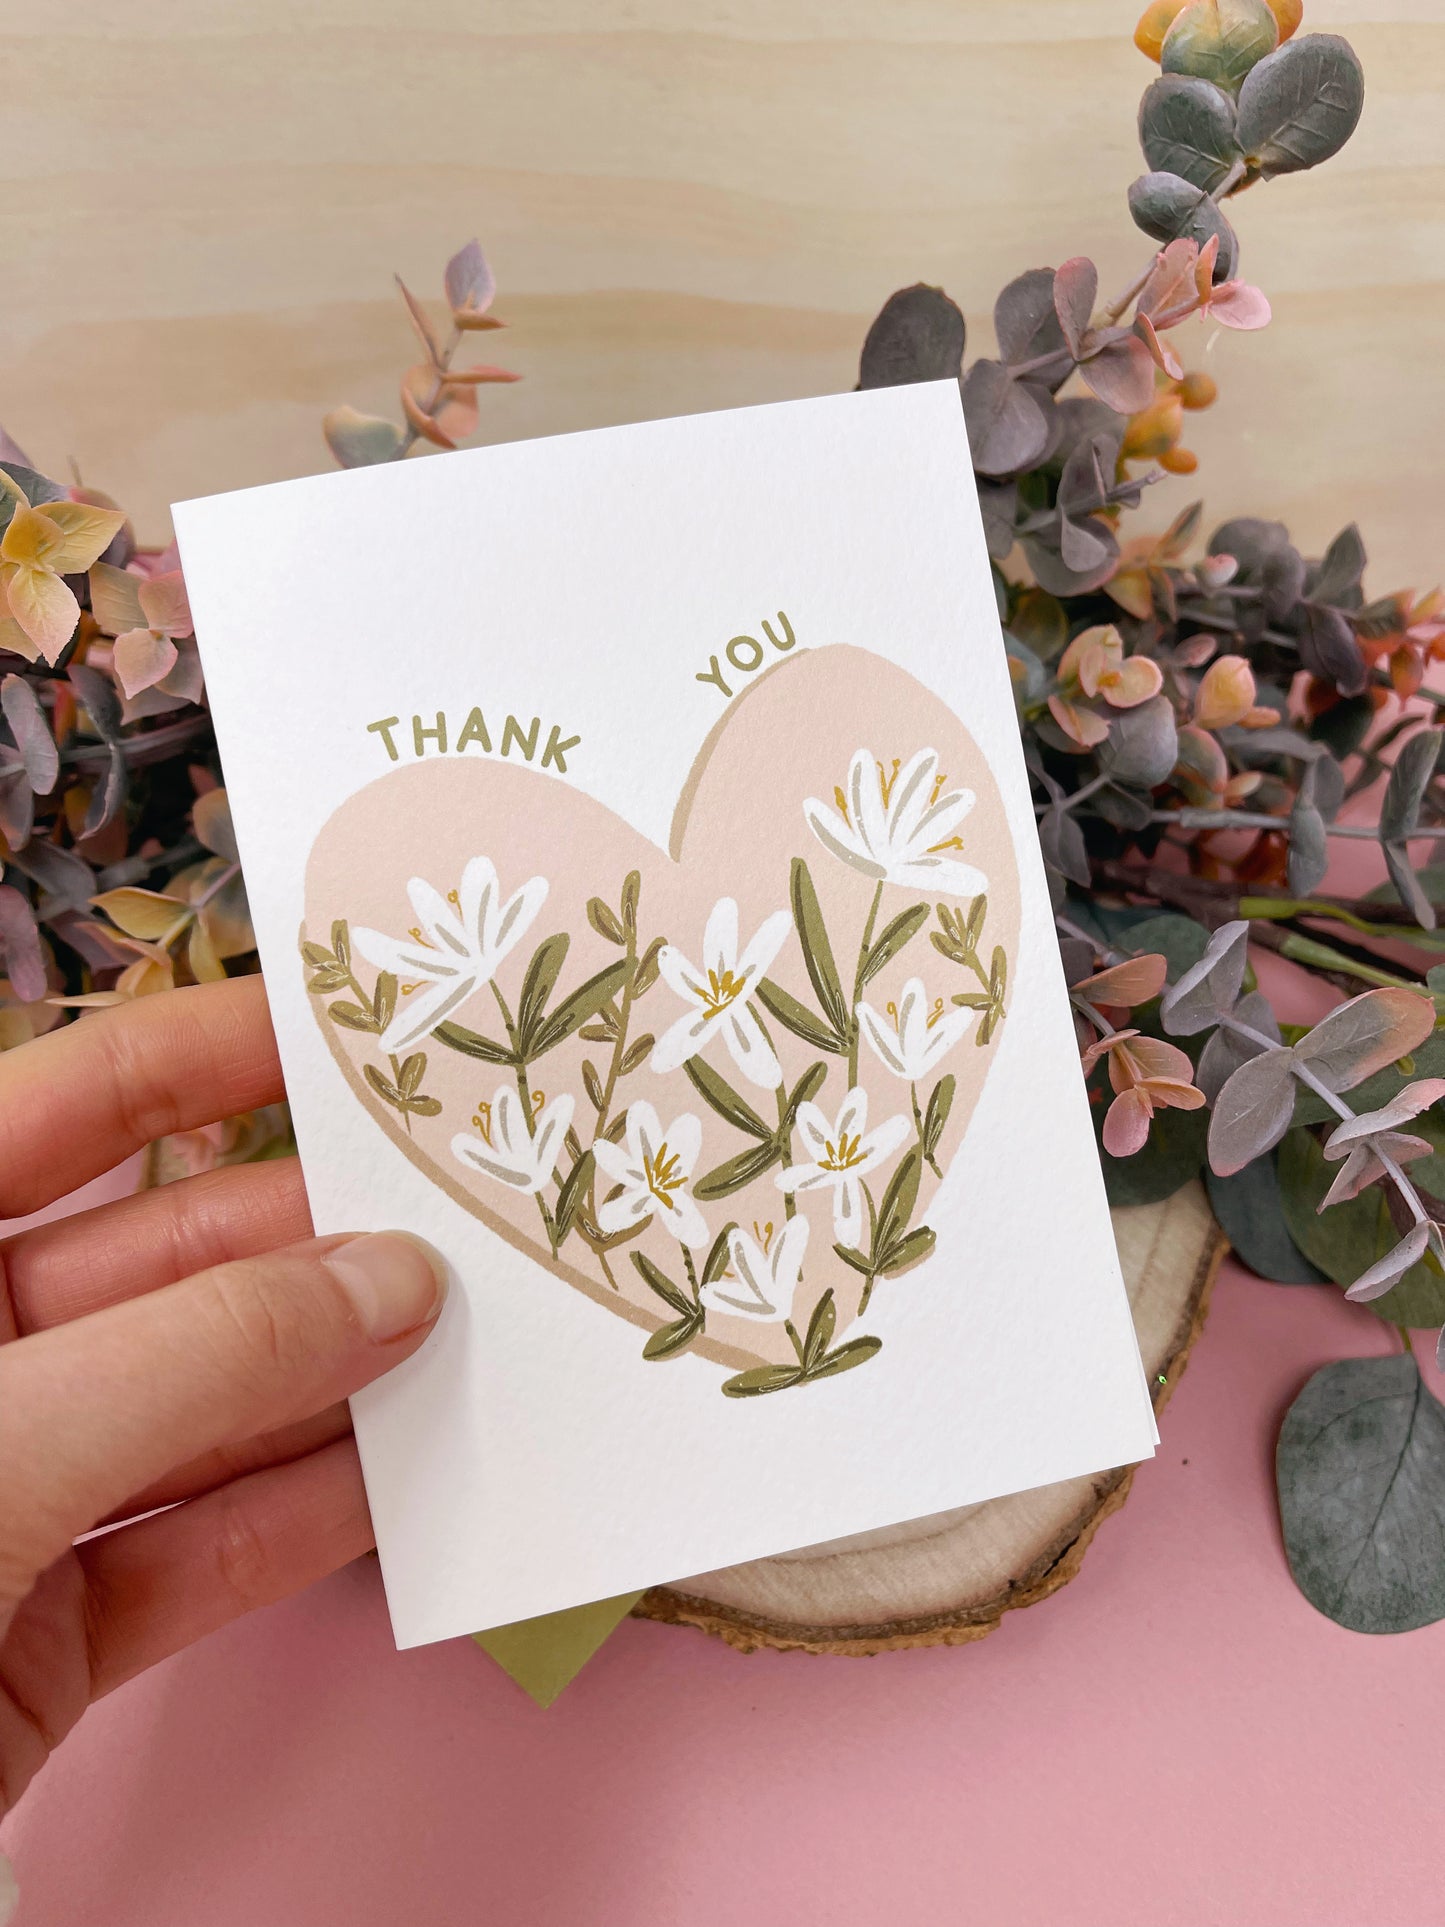 Heart Thank You Card